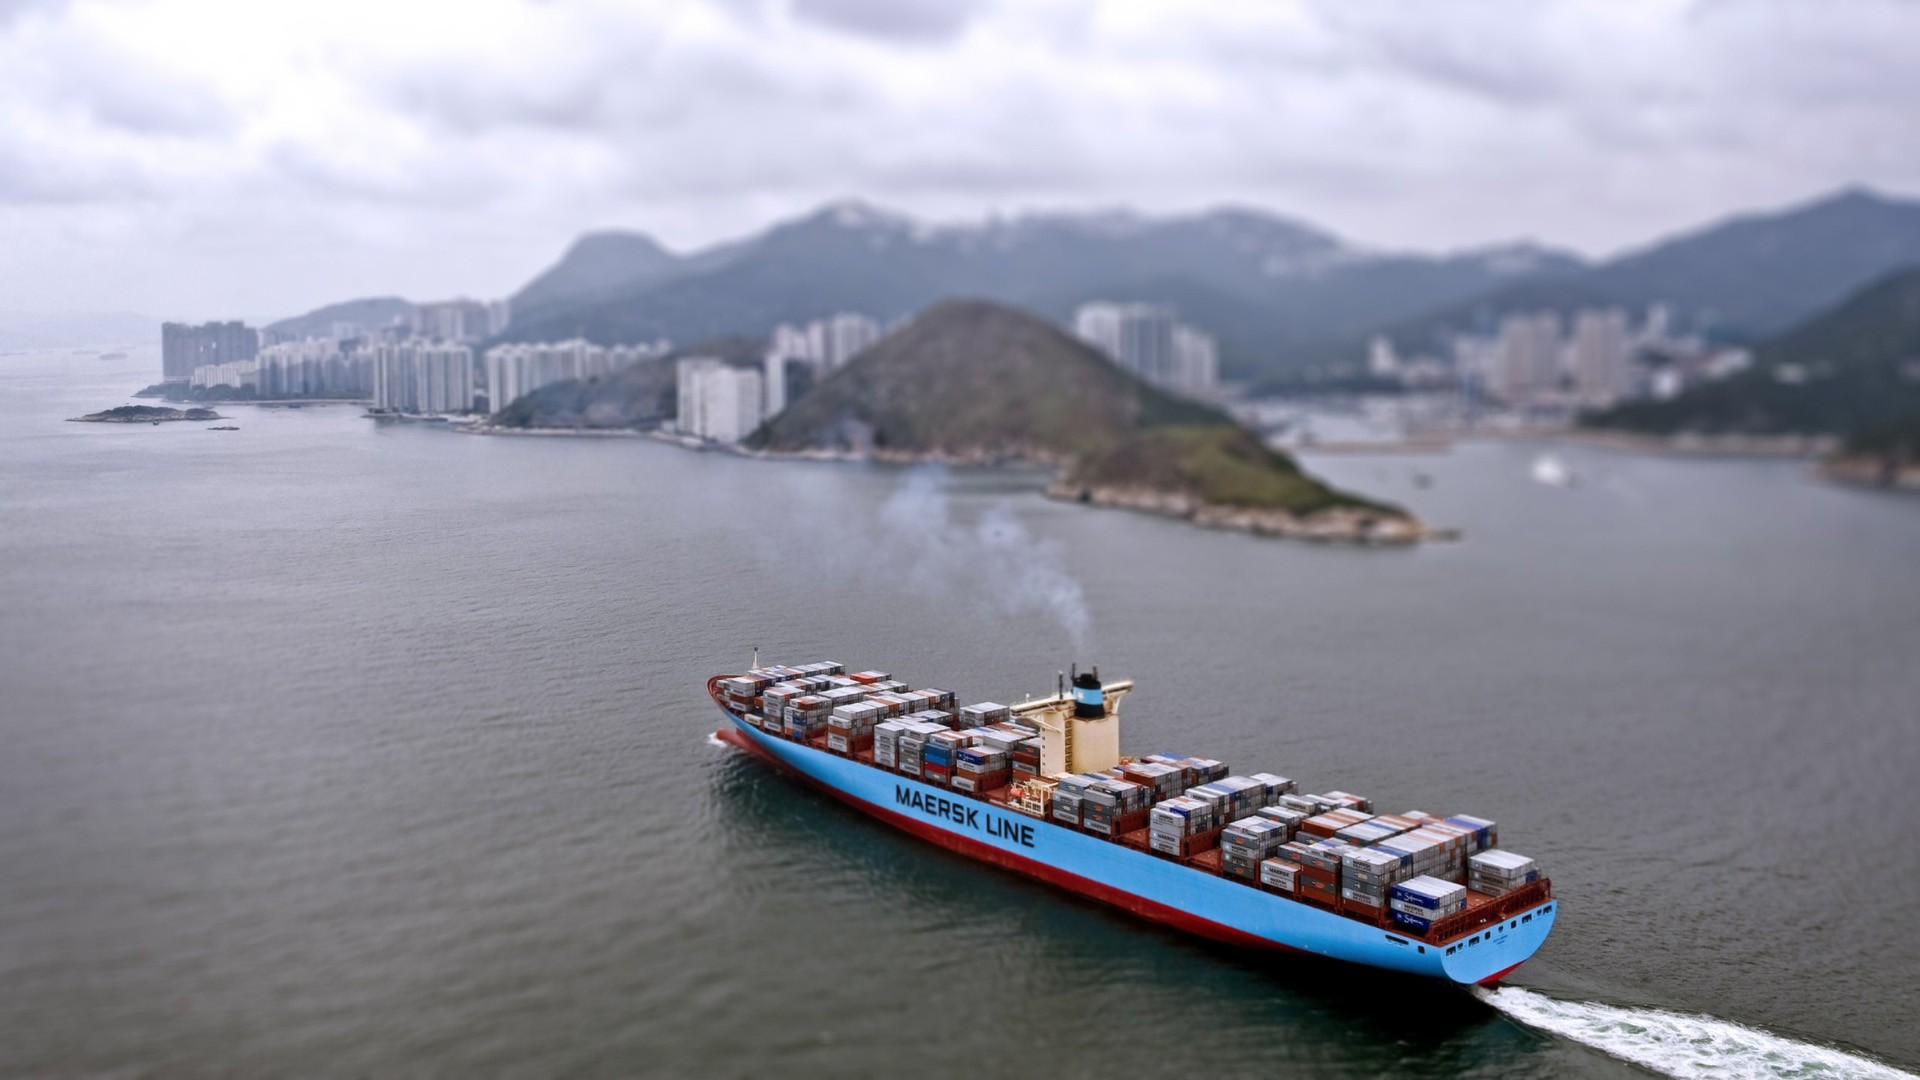 General 1920x1080 nature water ship vehicle sea Asia Hong Kong container ship tilt shift Maersk Line Maersk